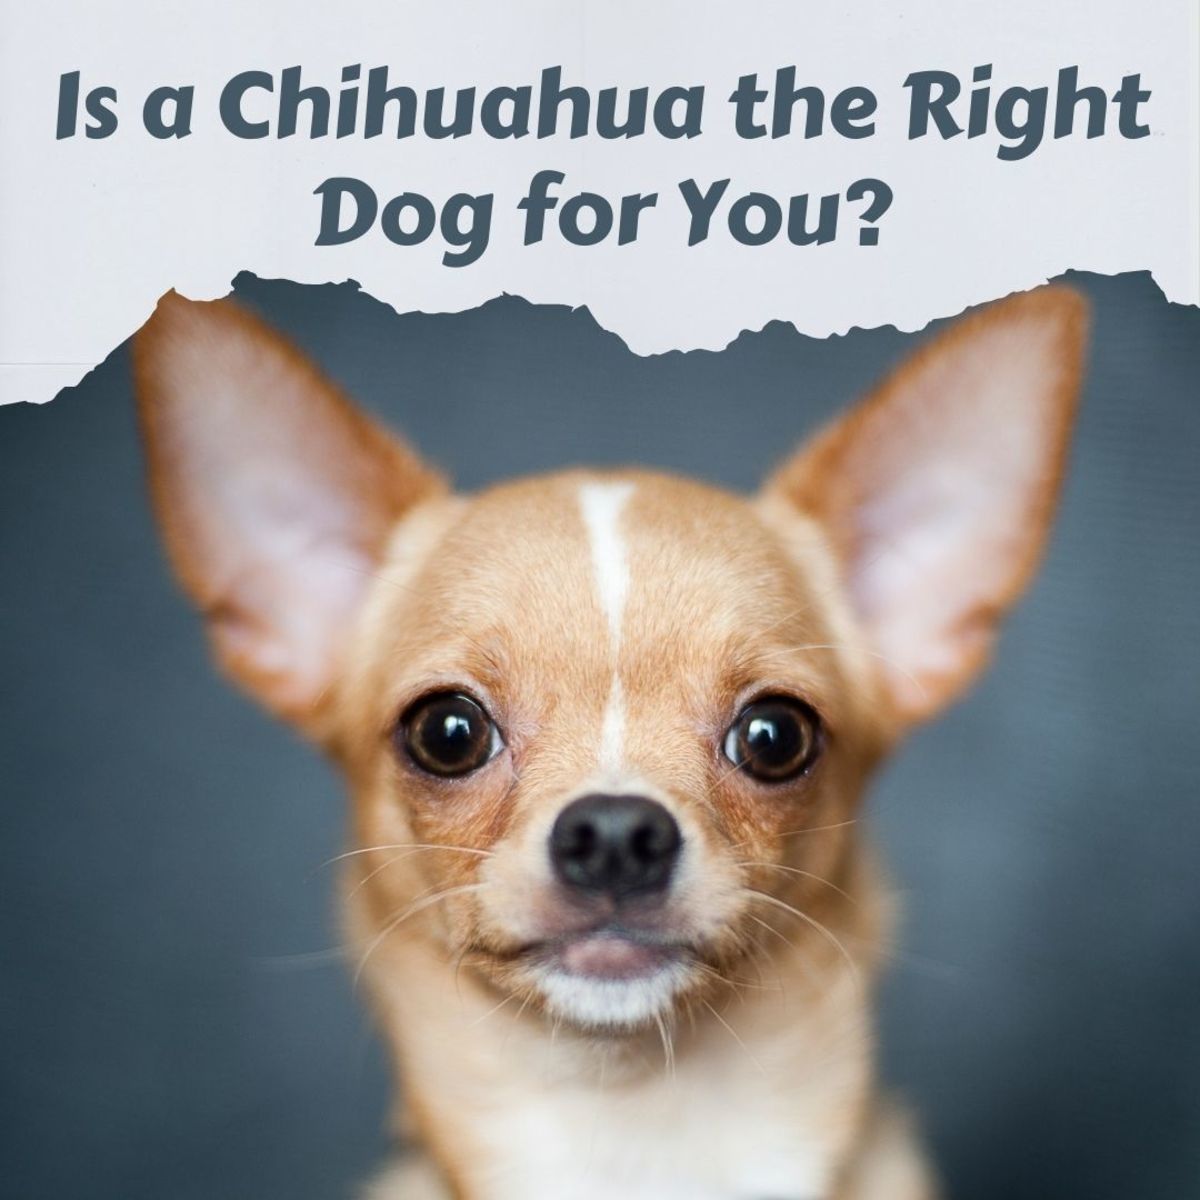 Should you get a Chihuahua?